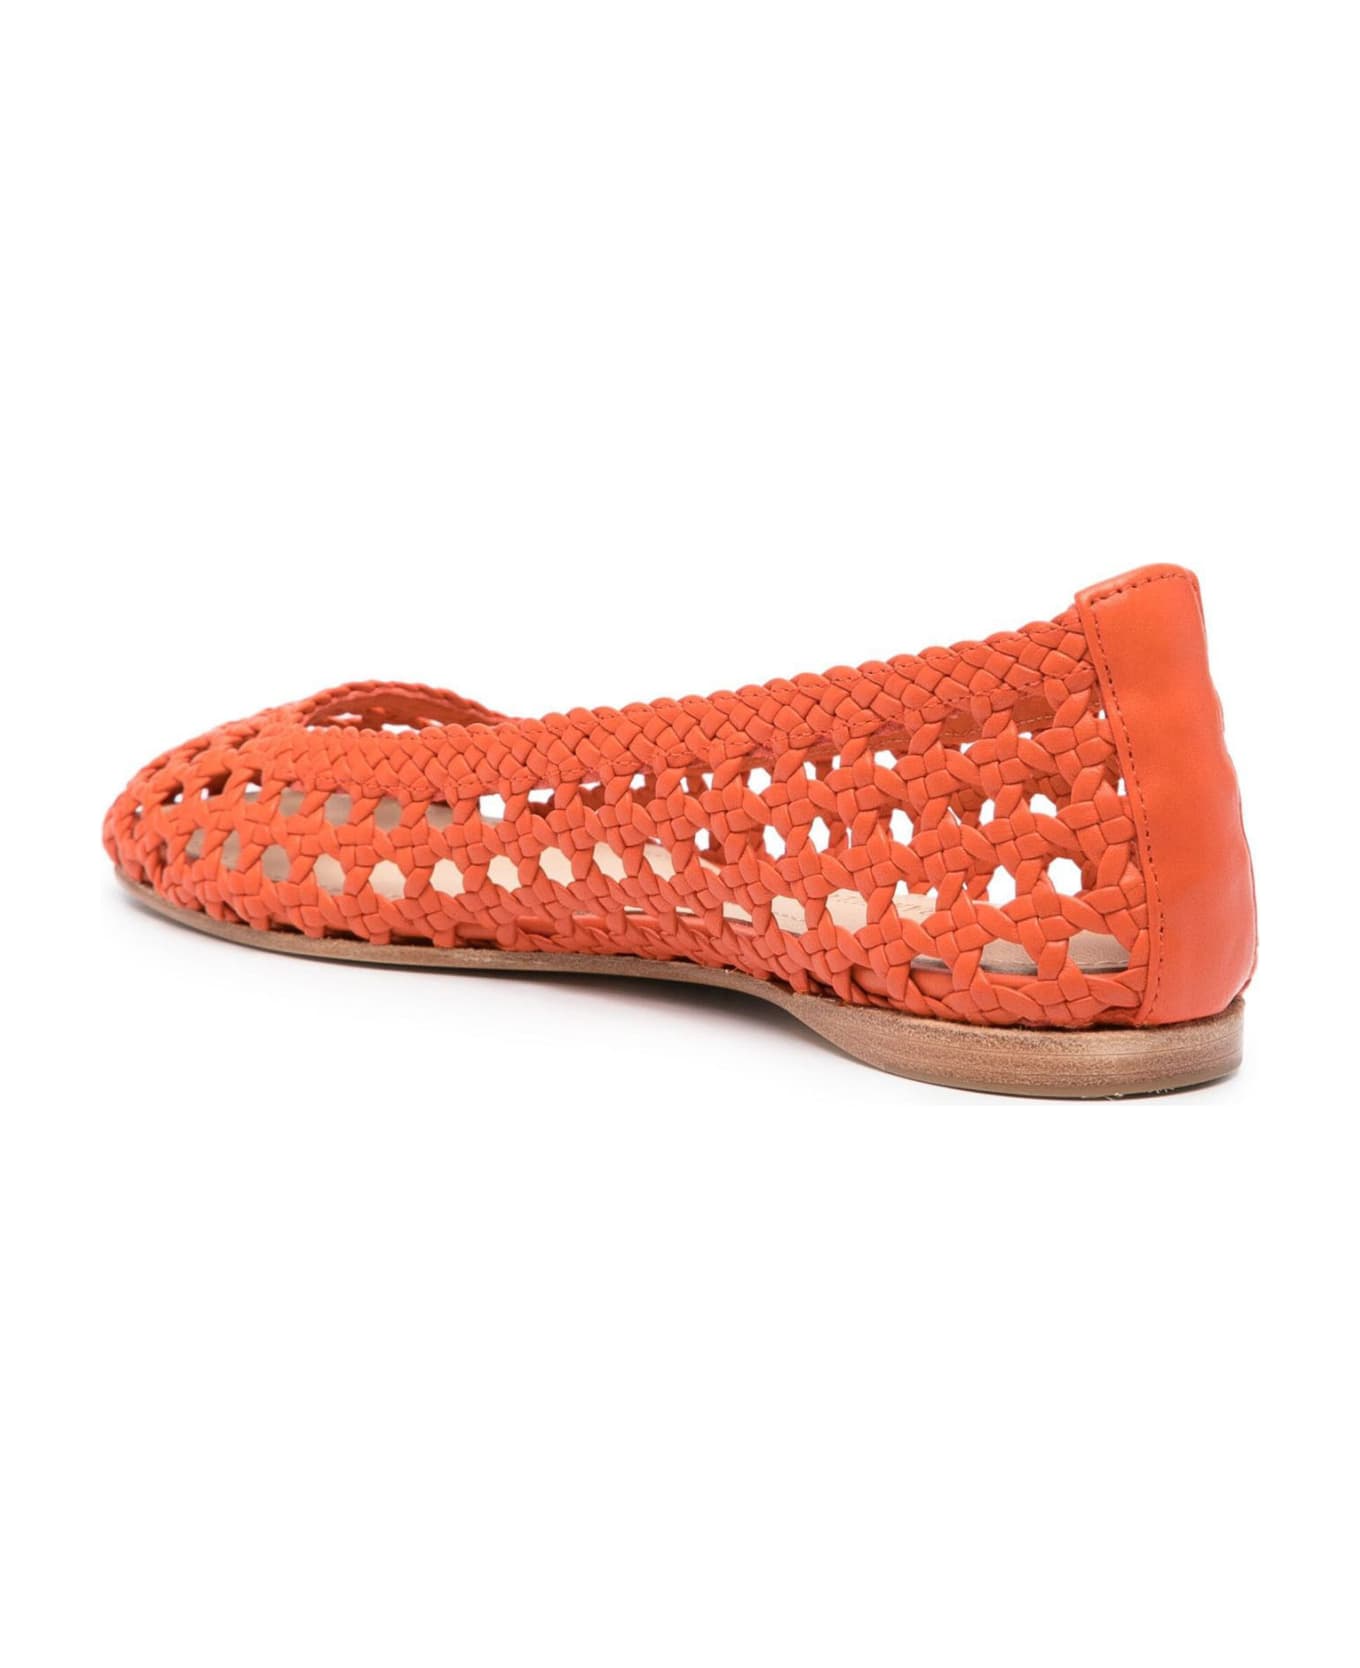 Paloma Barceló Orange Calf Leather Ballerina Shoes - Orange